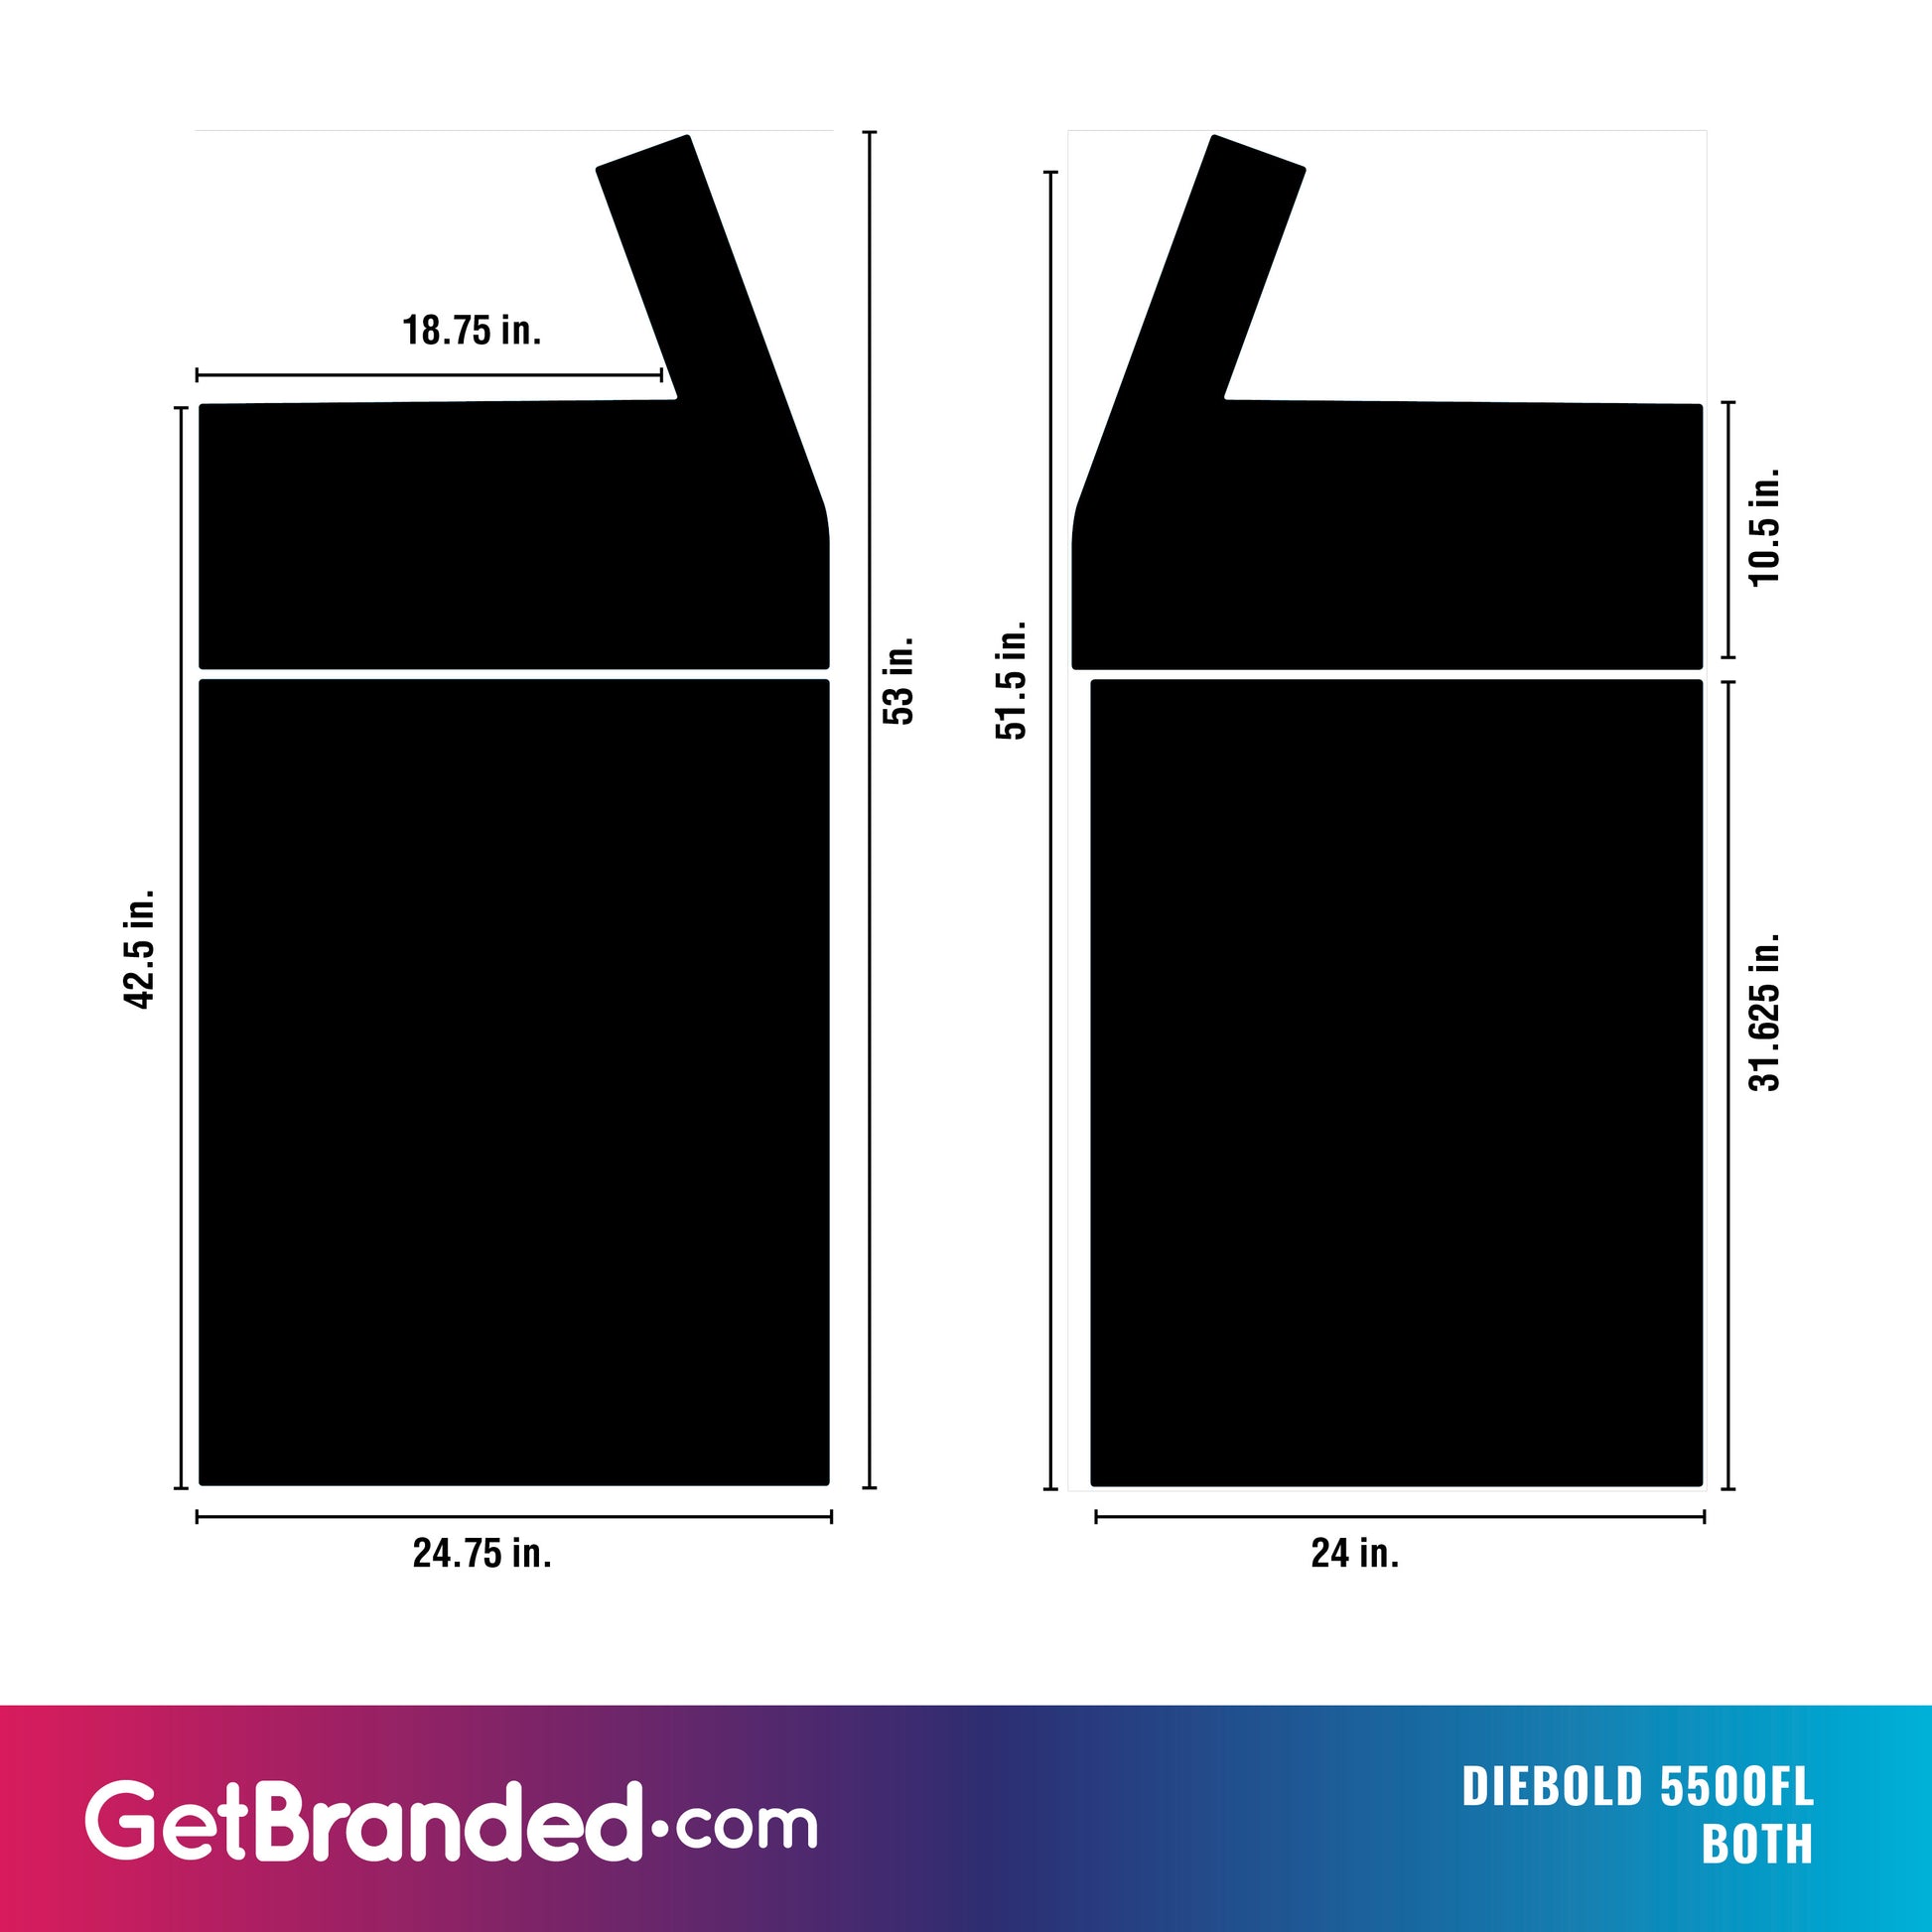 Diebold 5500FL both side panels dimensions